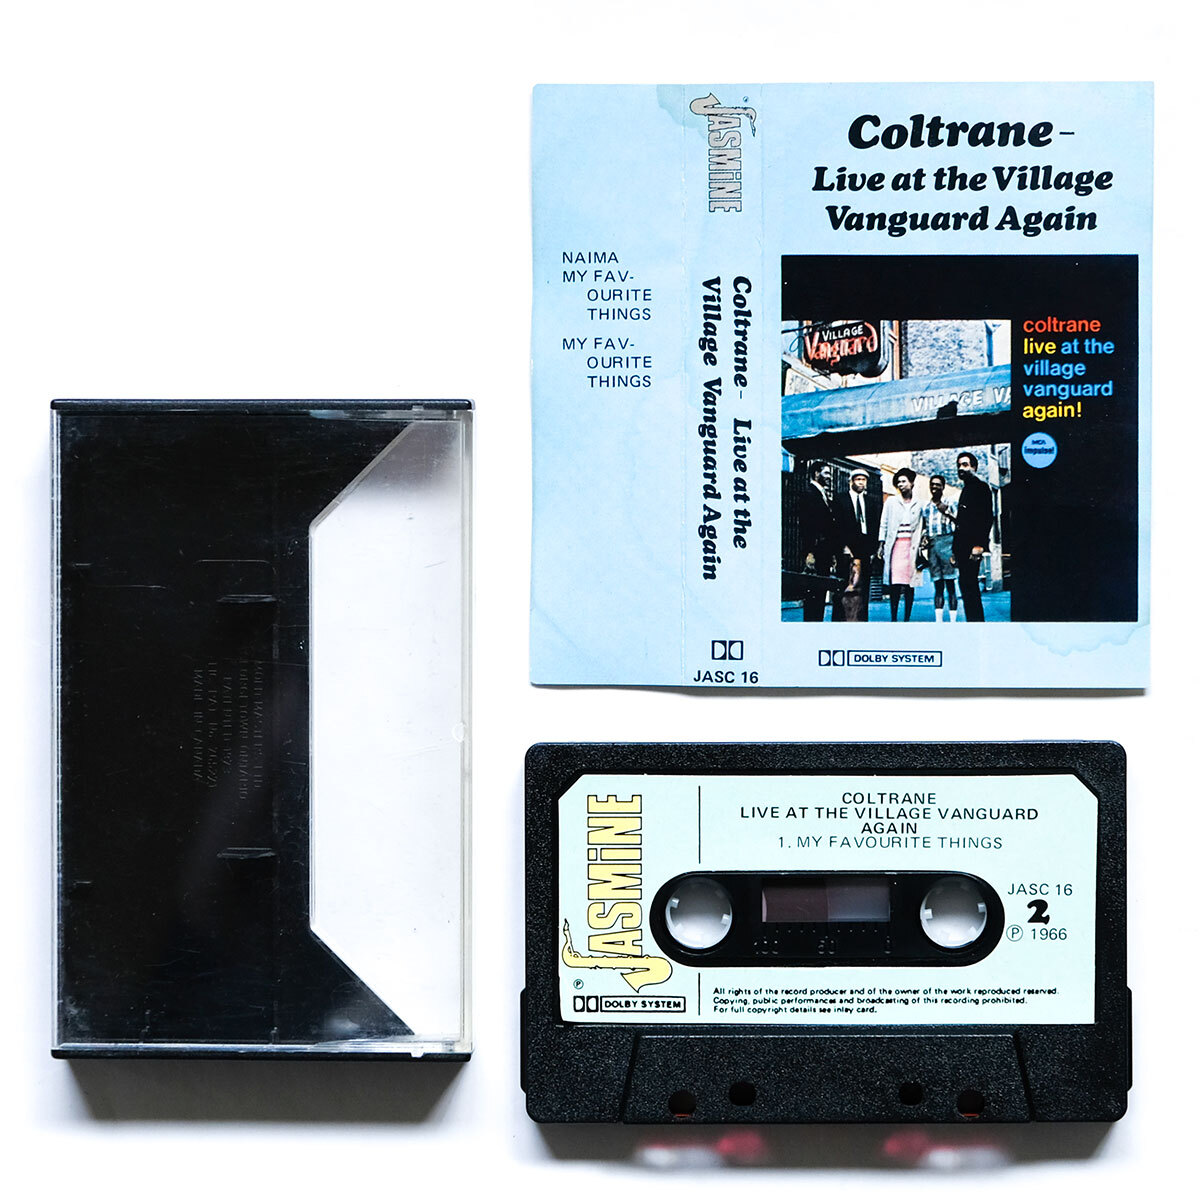 {UK version cassette tape }John Coltrane*Live at The Village Vanguard Again* John koru train /Impulse!/Pharoah Sanders